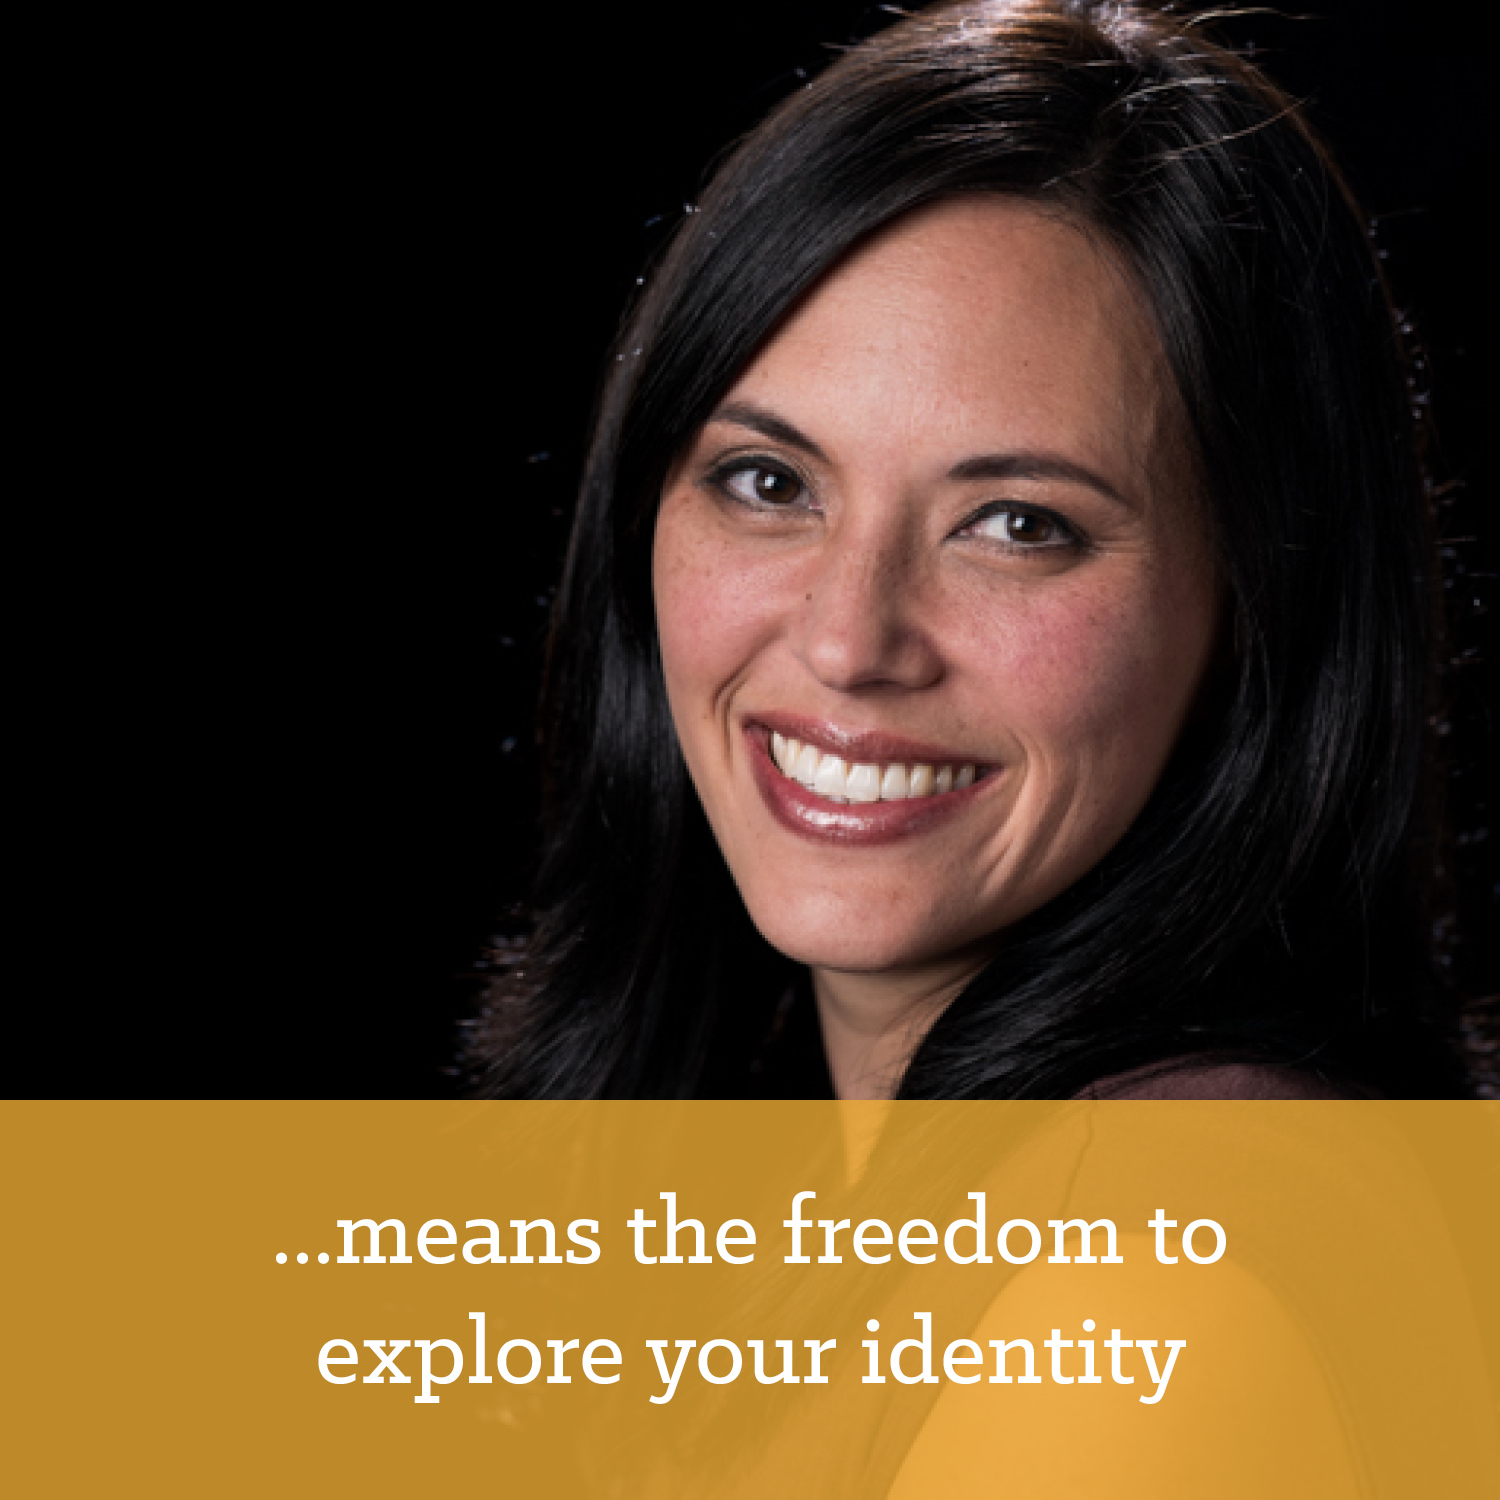 Freedom to explore your identity